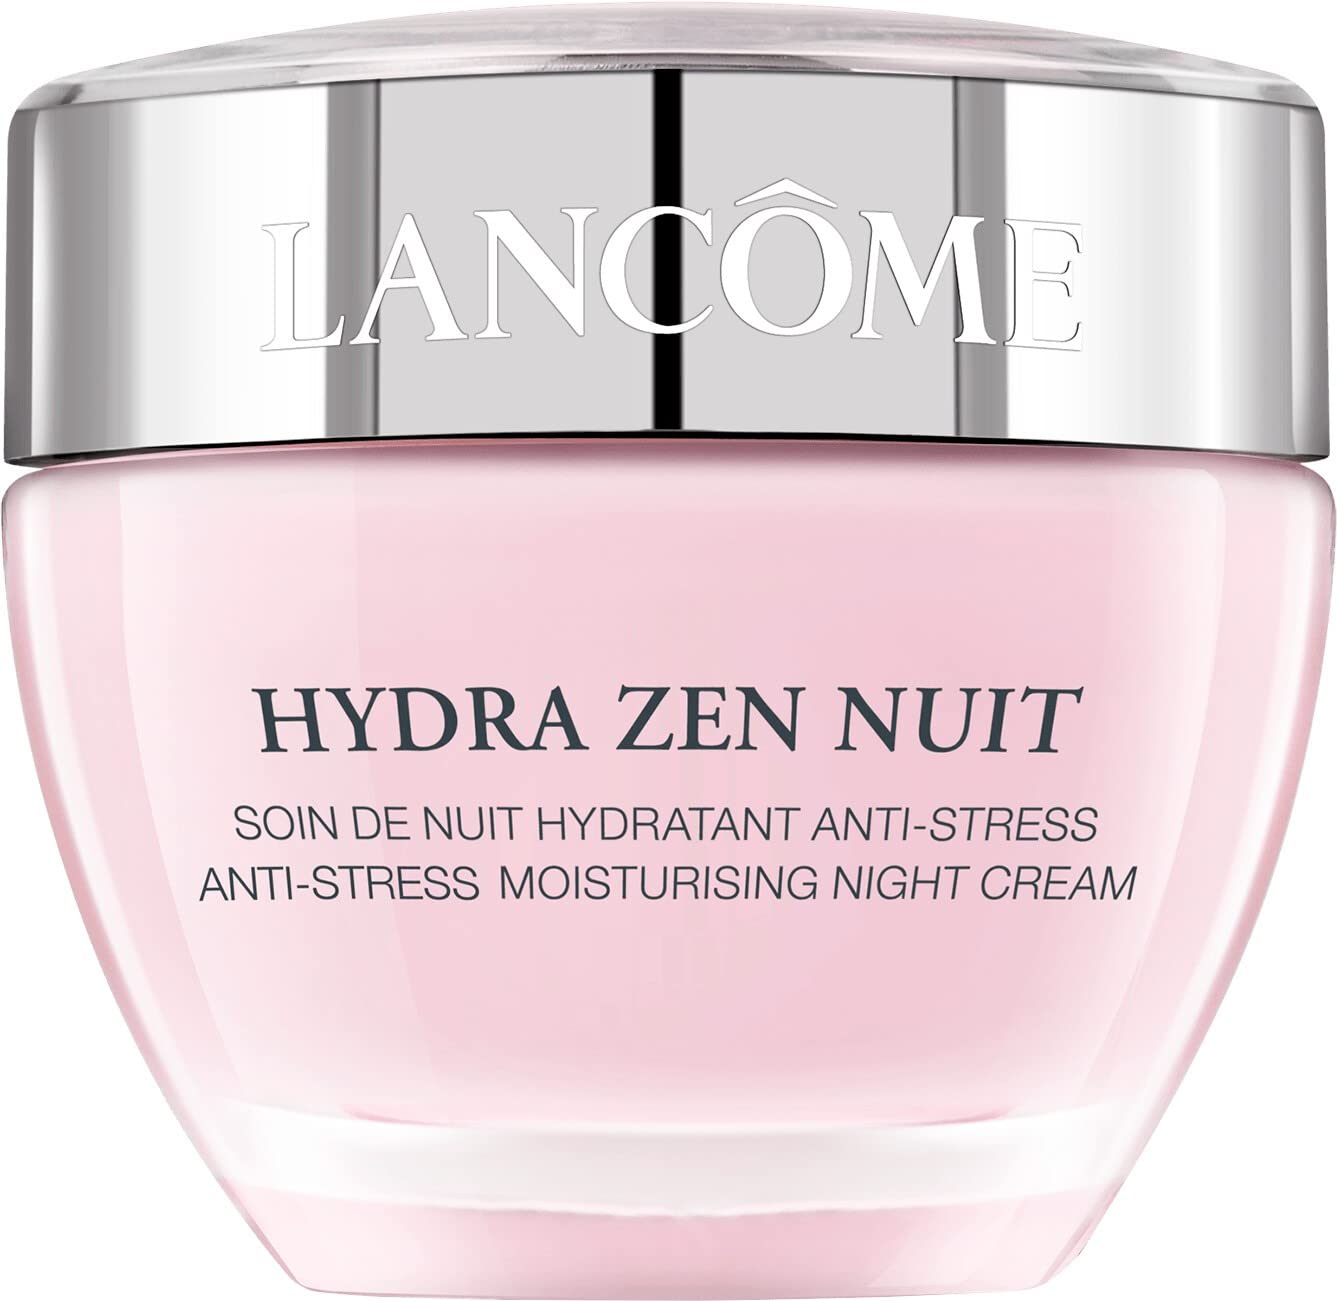 Lancome Hydra Zen Nuit Anti-Stress Moisturising Night Cream,Rose